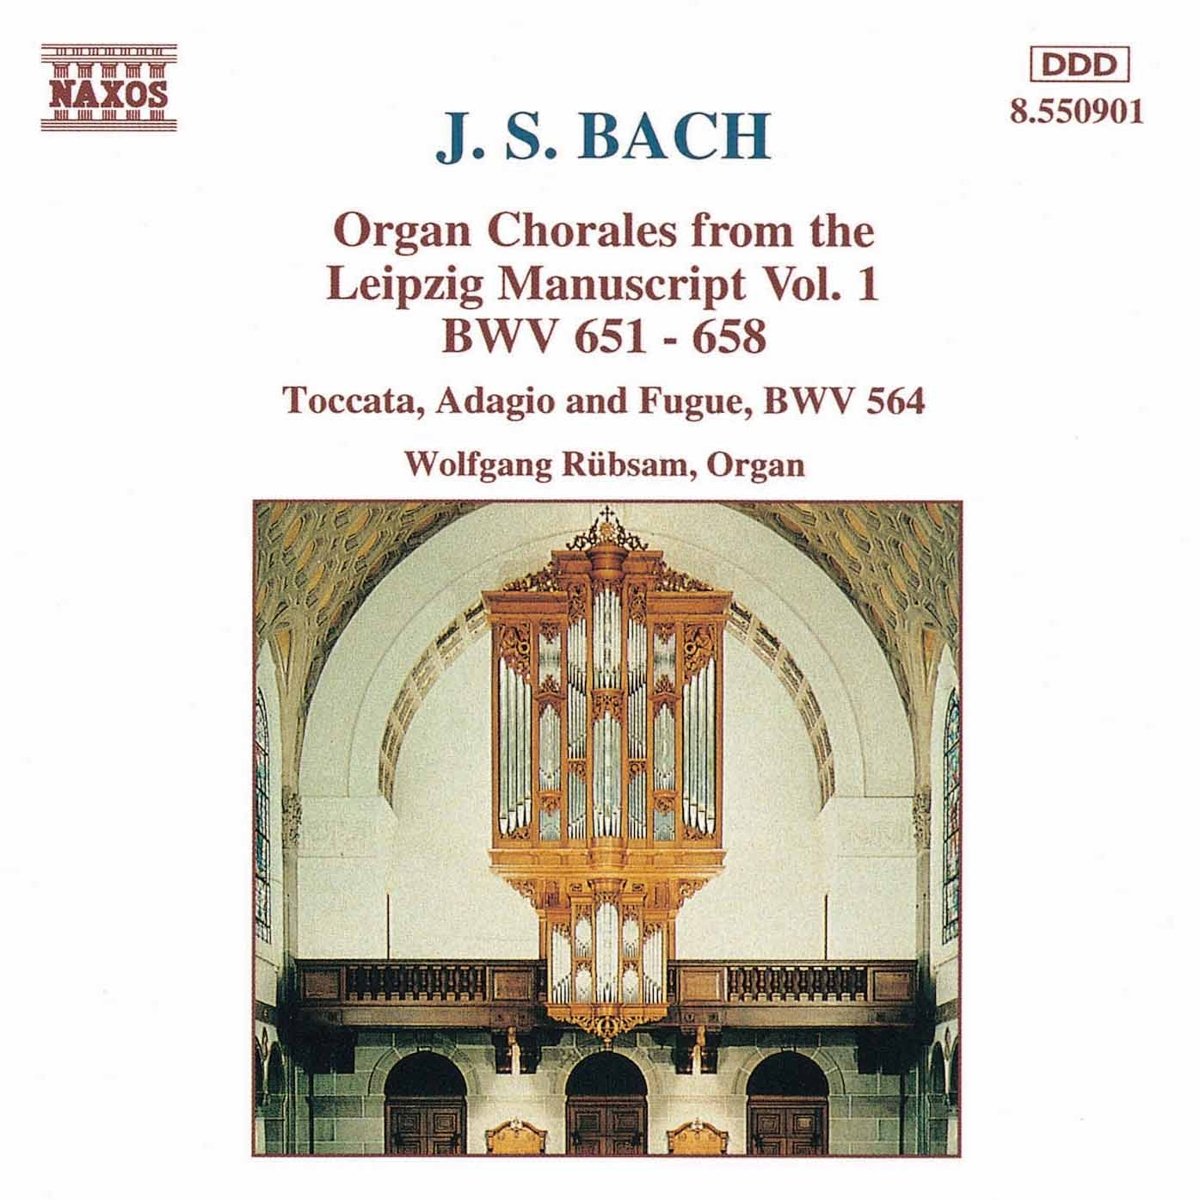 BACH: Organ Chorales vol. 1